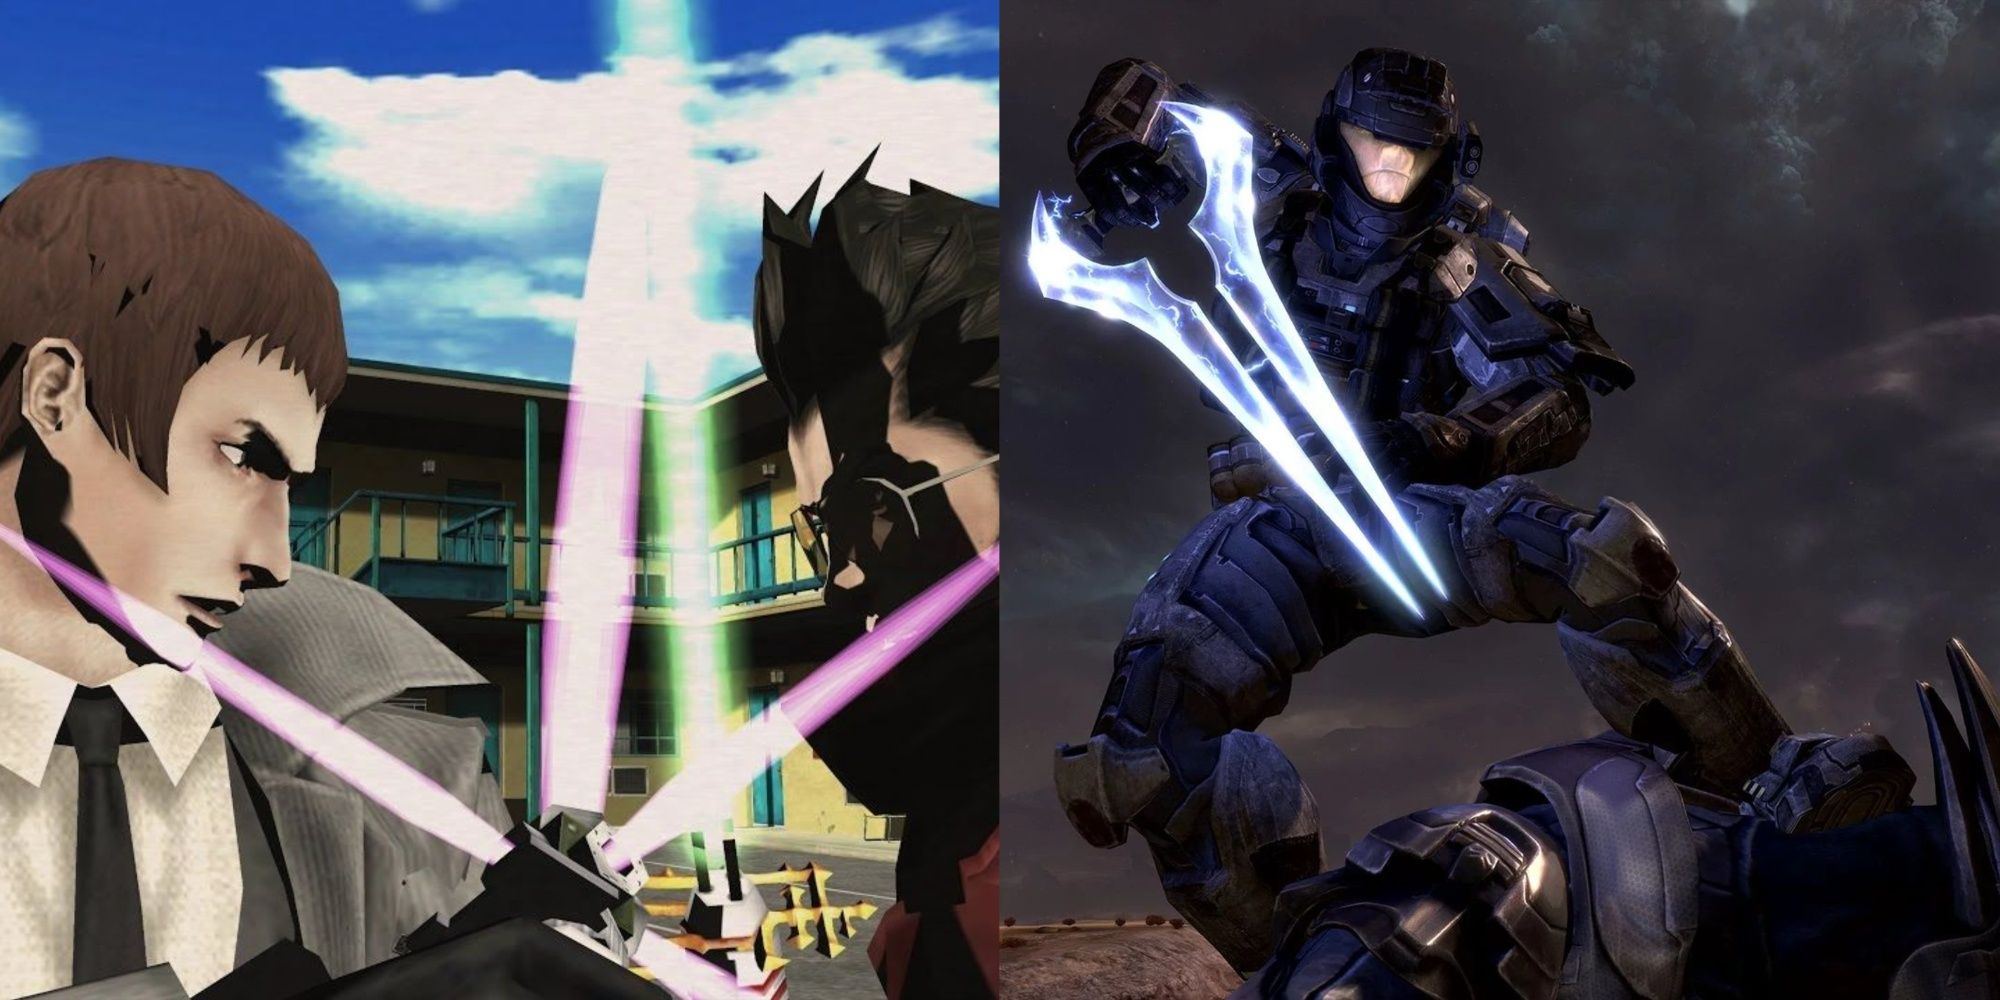 The Best Laser Swords In Video Games That Aren't Lightsabers ...